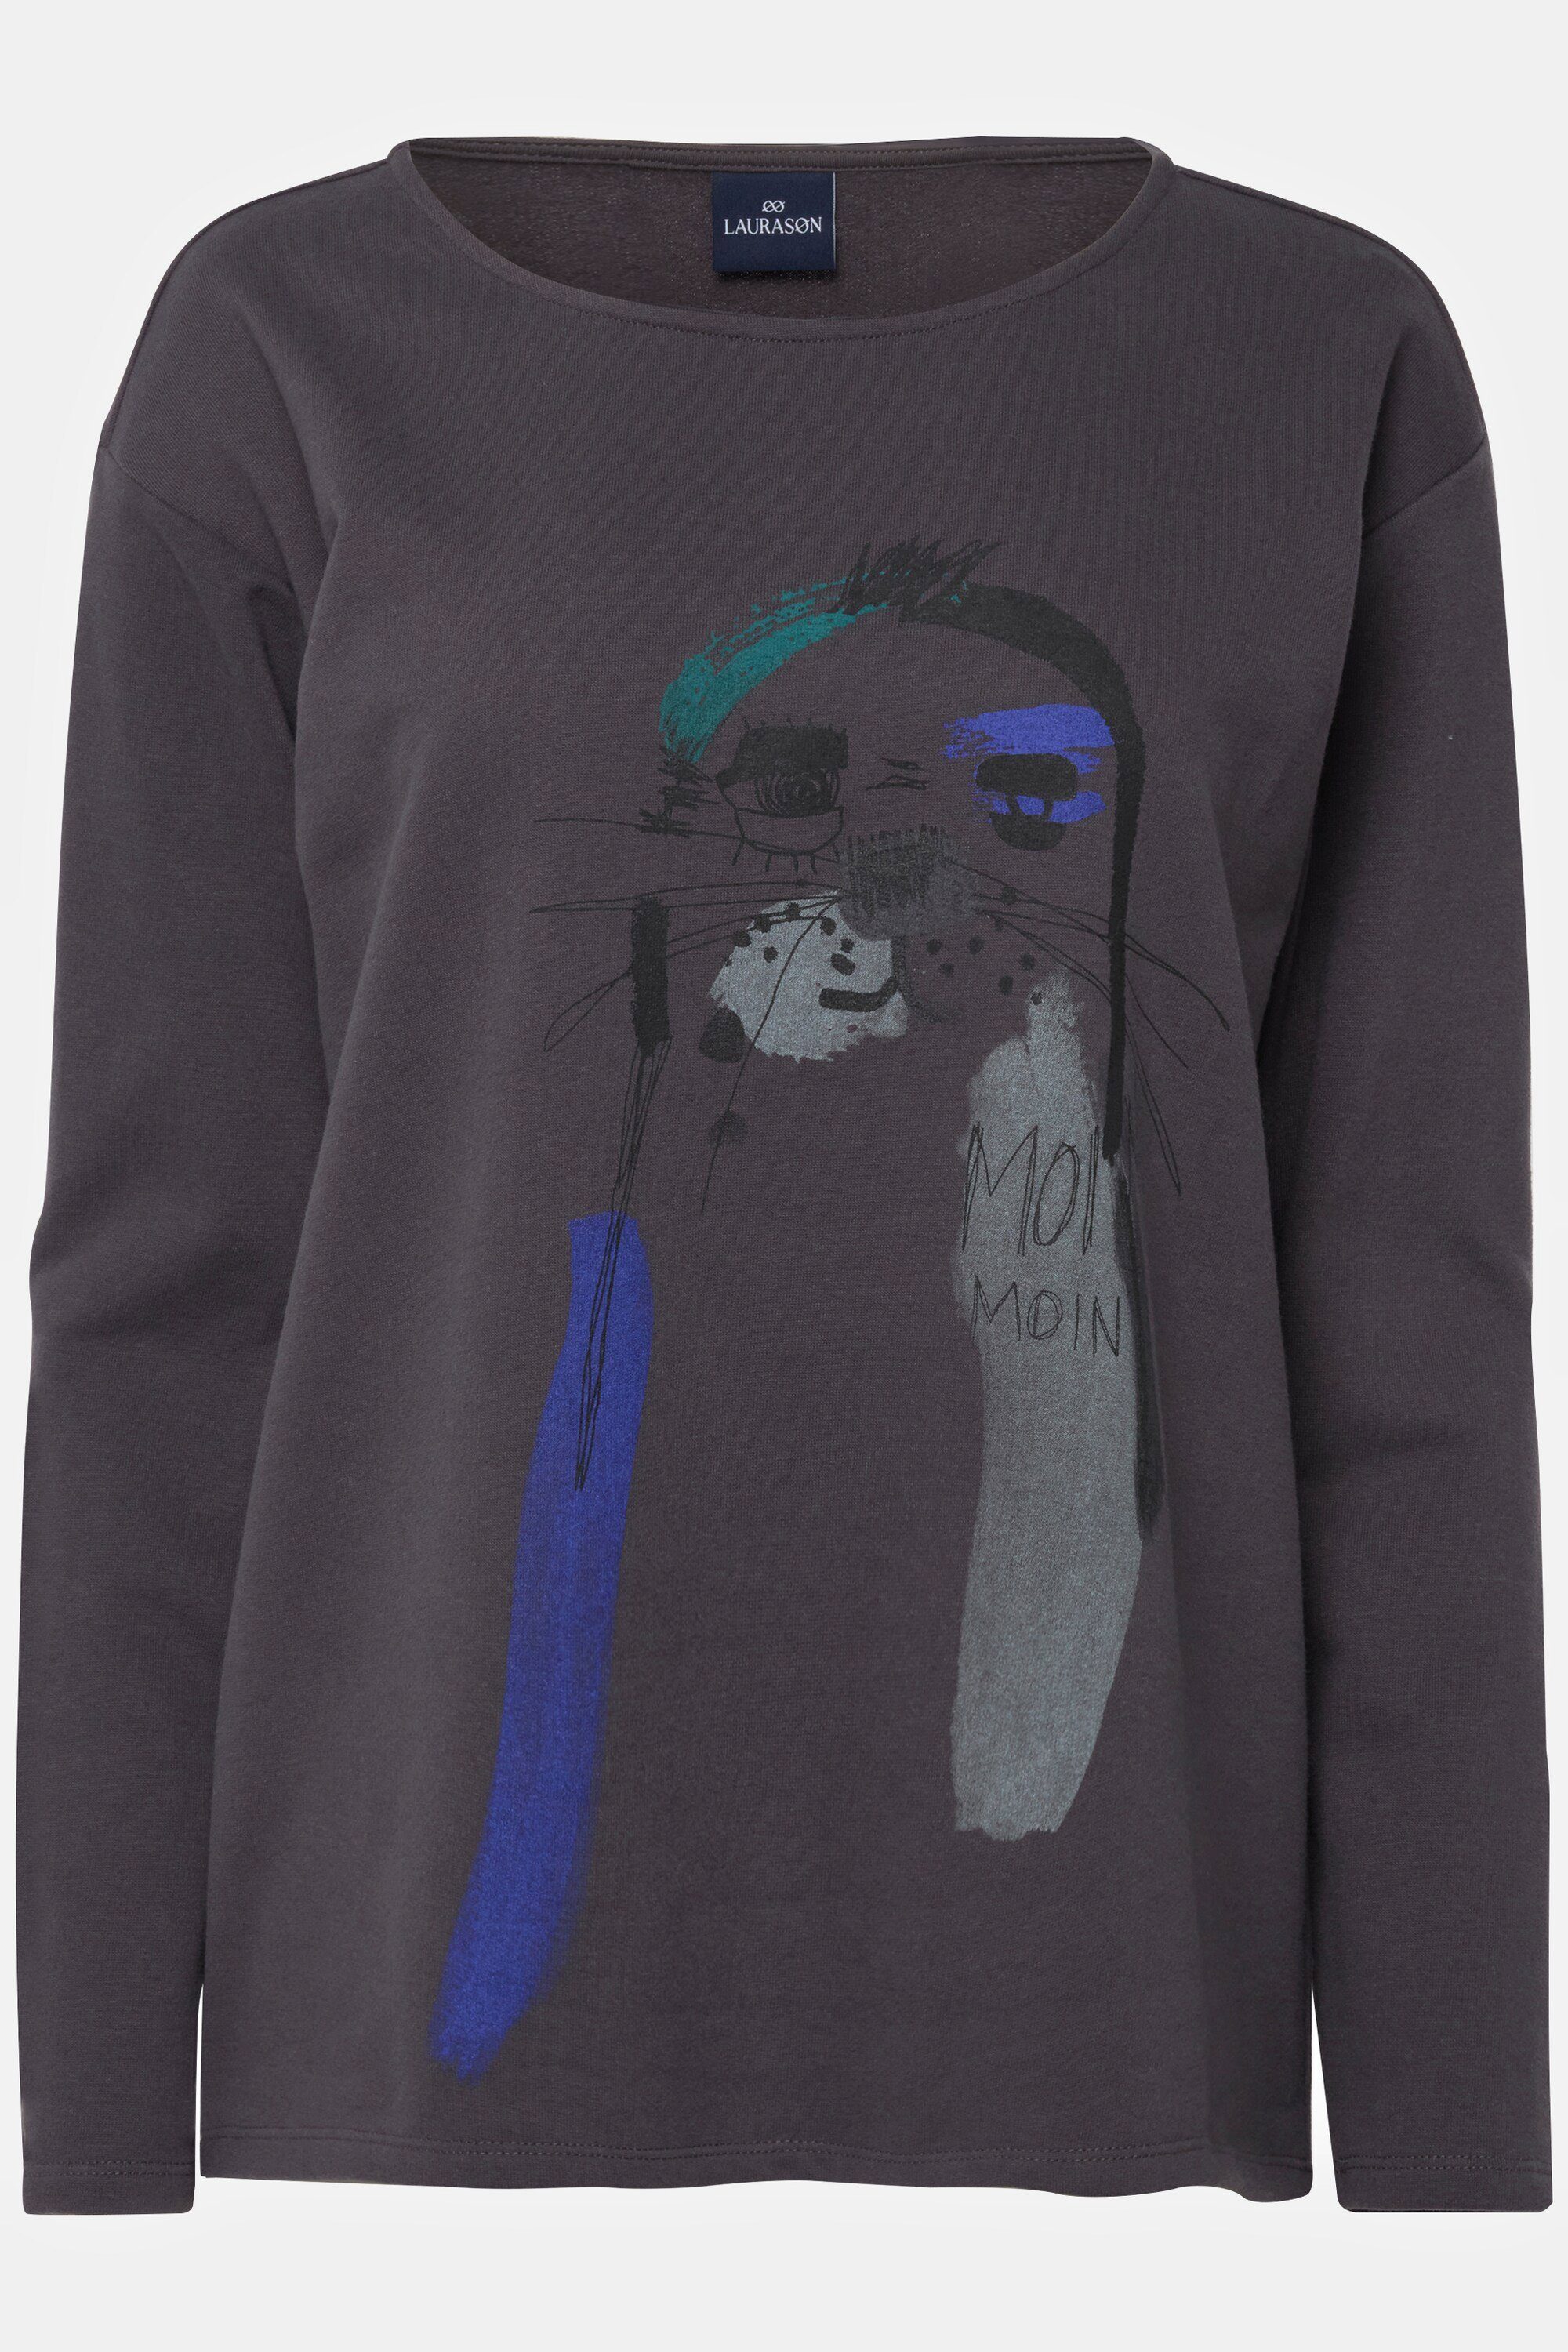 Laurasøn Sweatshirt Sweatshirt oversized Print dunkelgrau Rundhals Langarm Robben